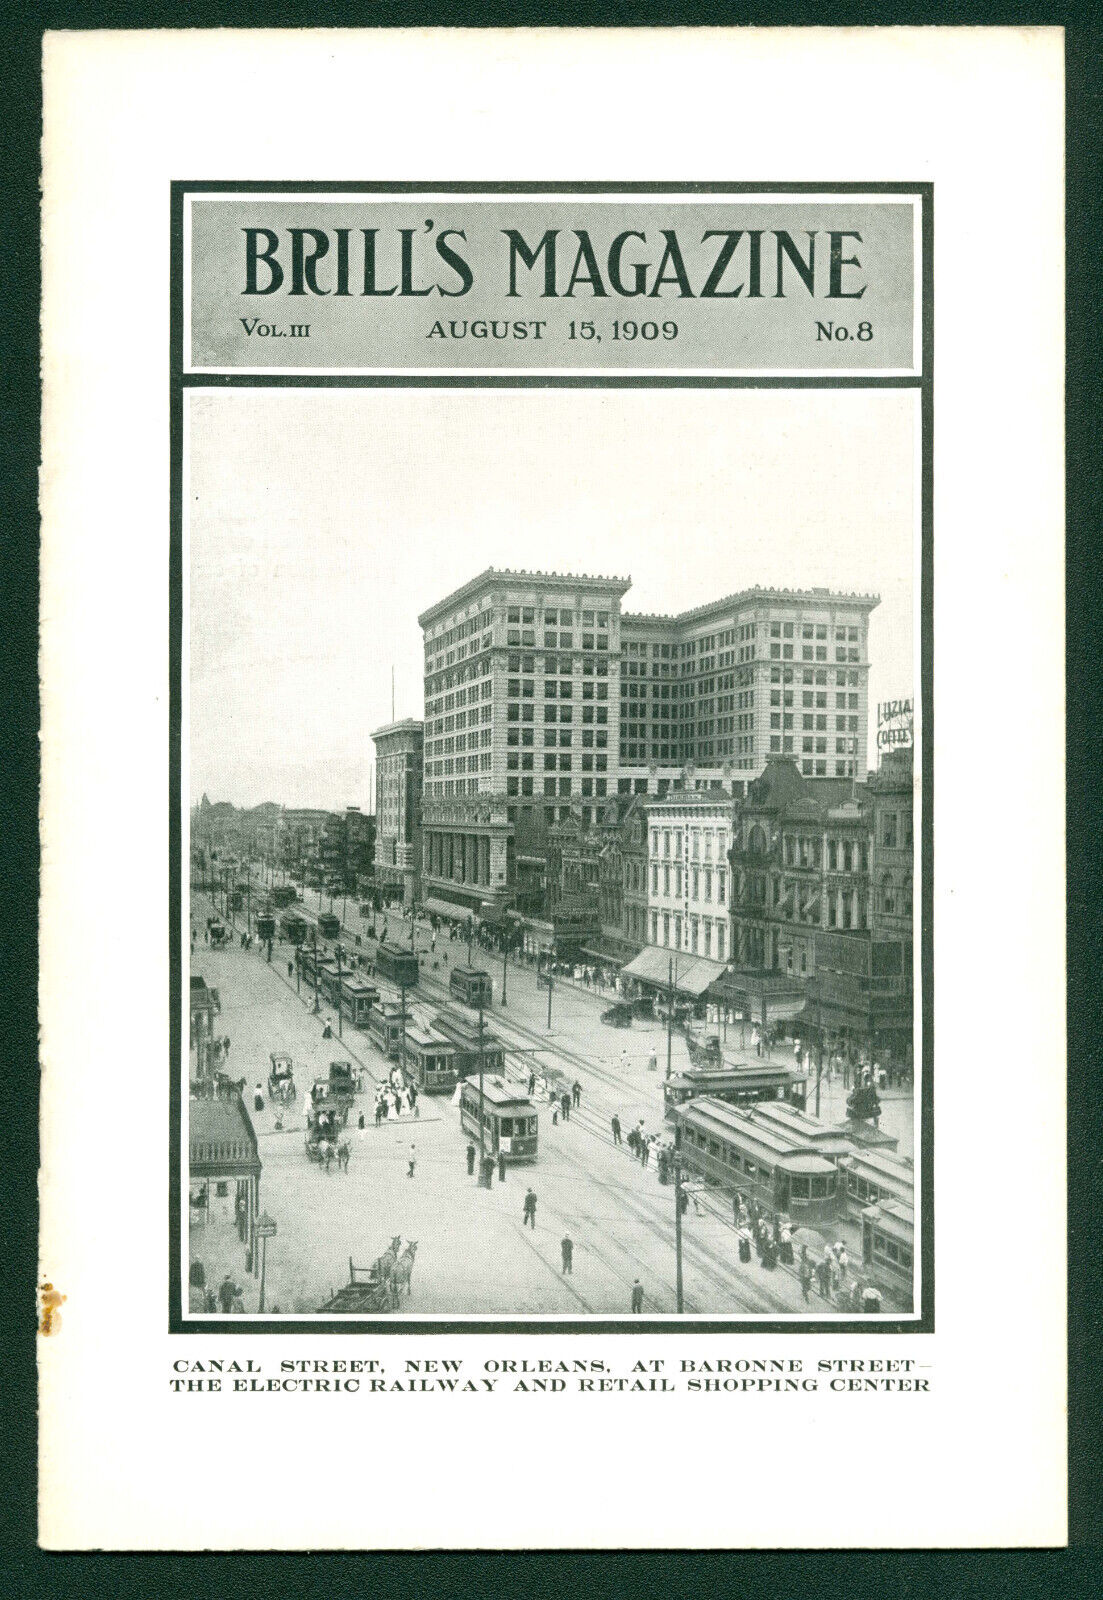 Brill\'s Magazine Aug. 15, 1909 Vol. 111, No. 8 - Original Issue NOT a Reprint